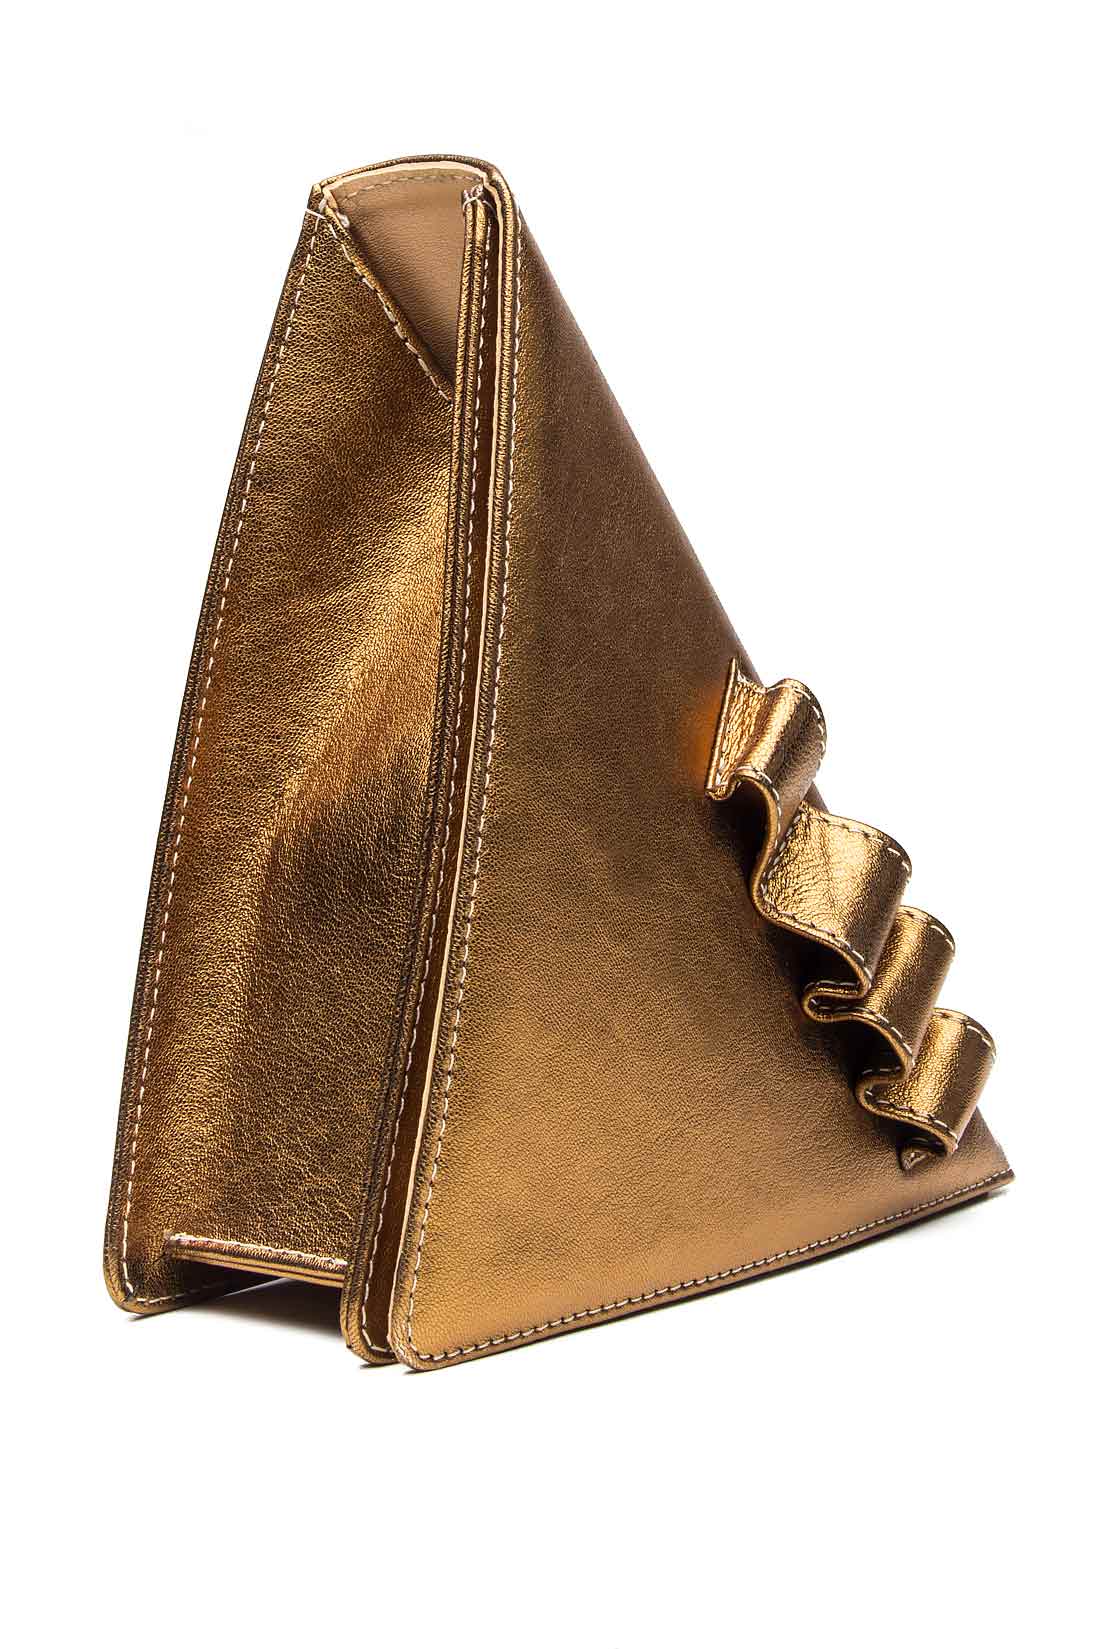 Leather triangle clutch Laura Olaru image 2